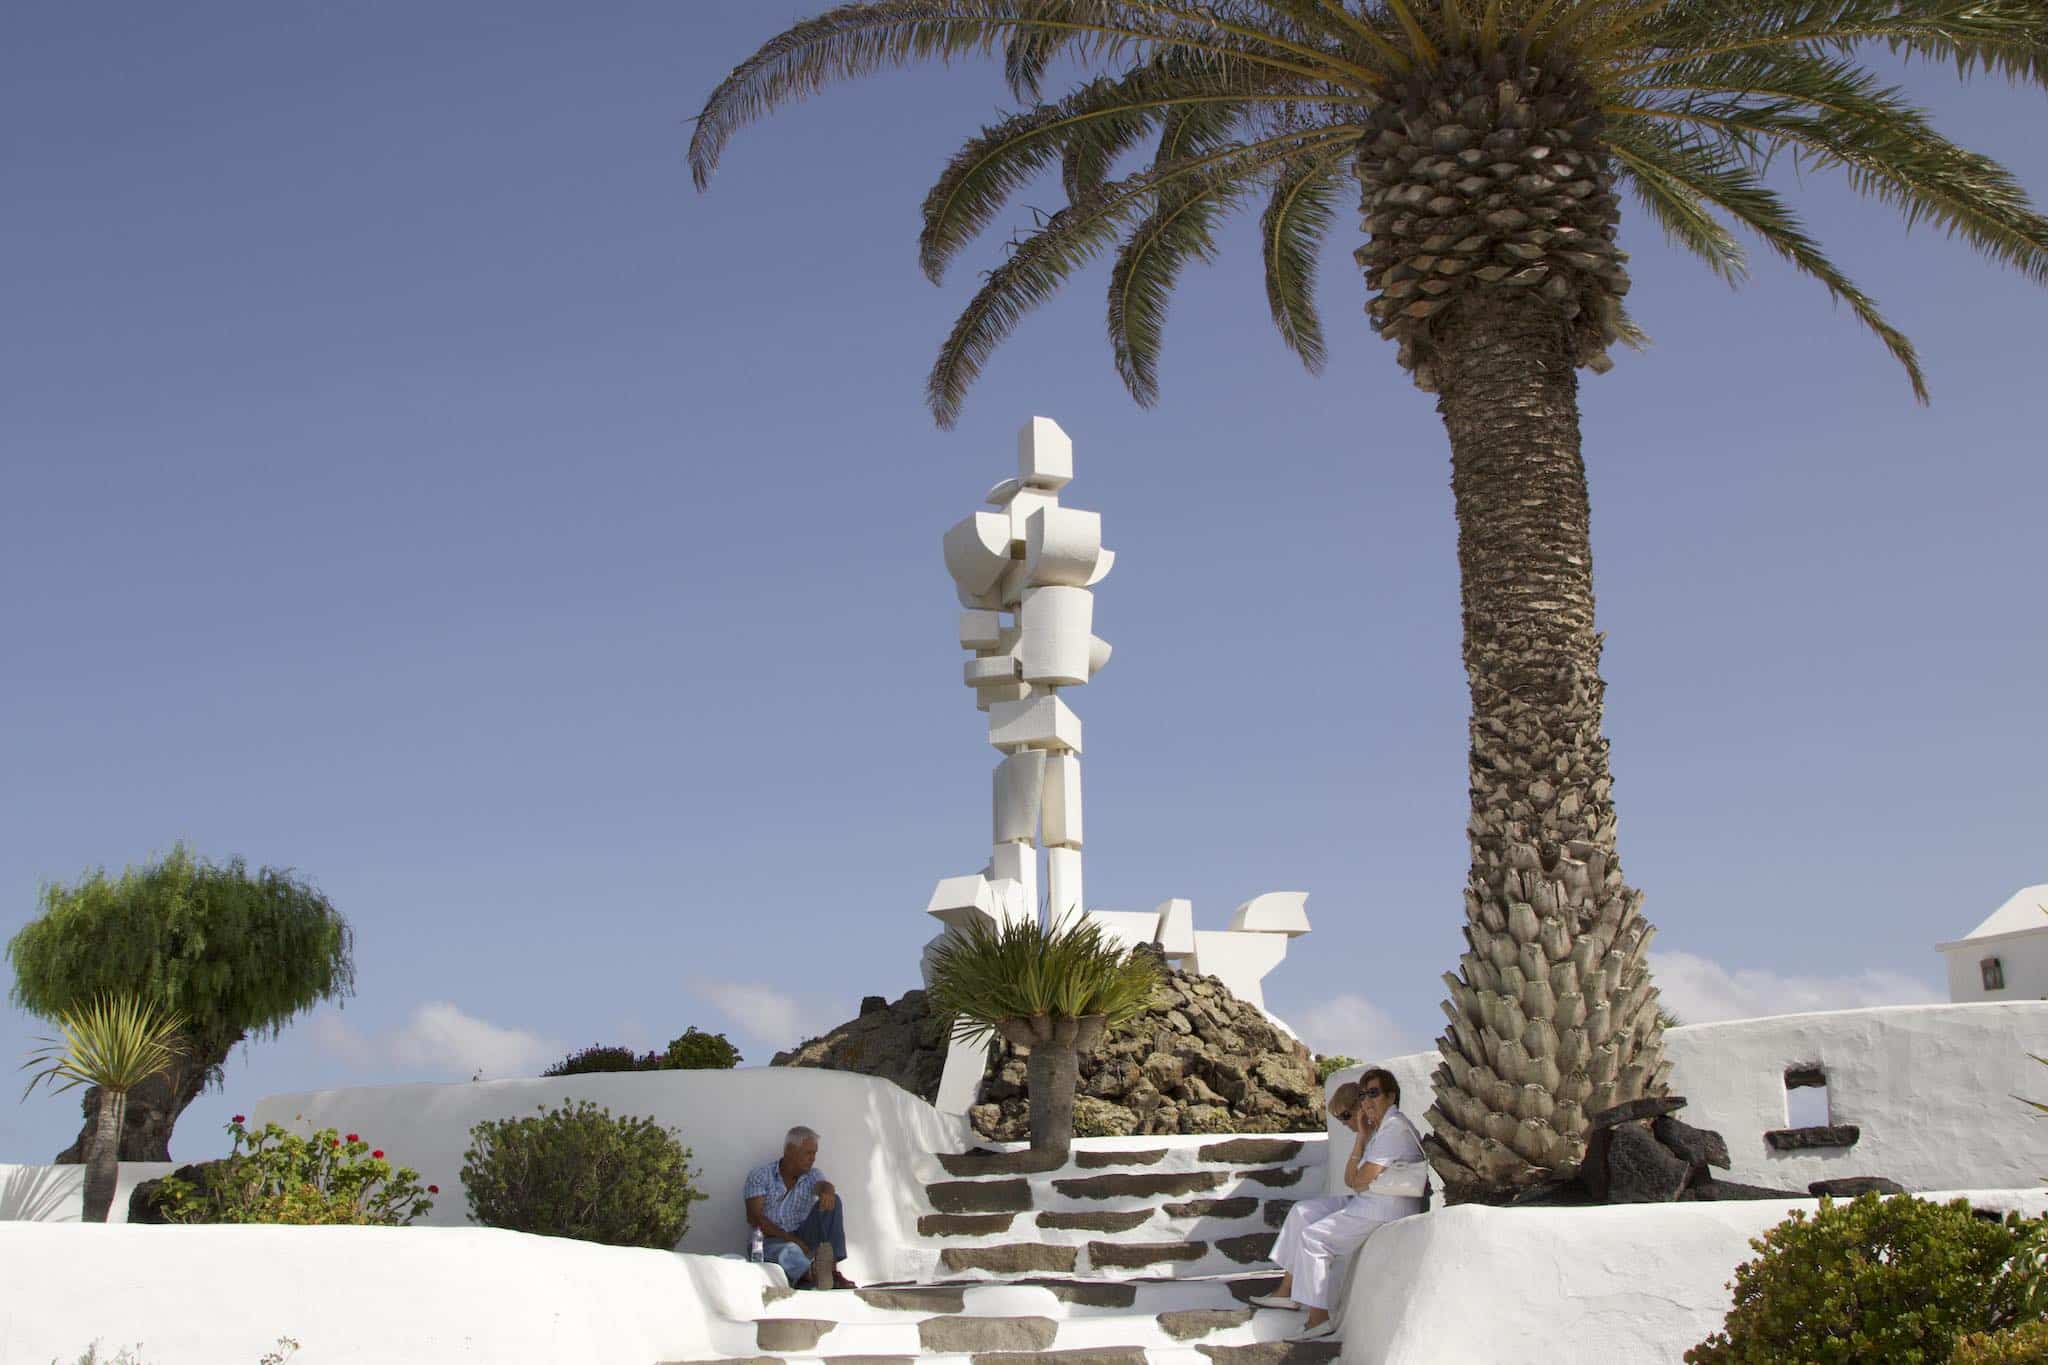 Casa-Museo del Campesino: Tą instytucją artysta César Manrique chciał oddać hołd rolnikom z Lanzarote. Zdjęcie: Sascha Tegtmeyer